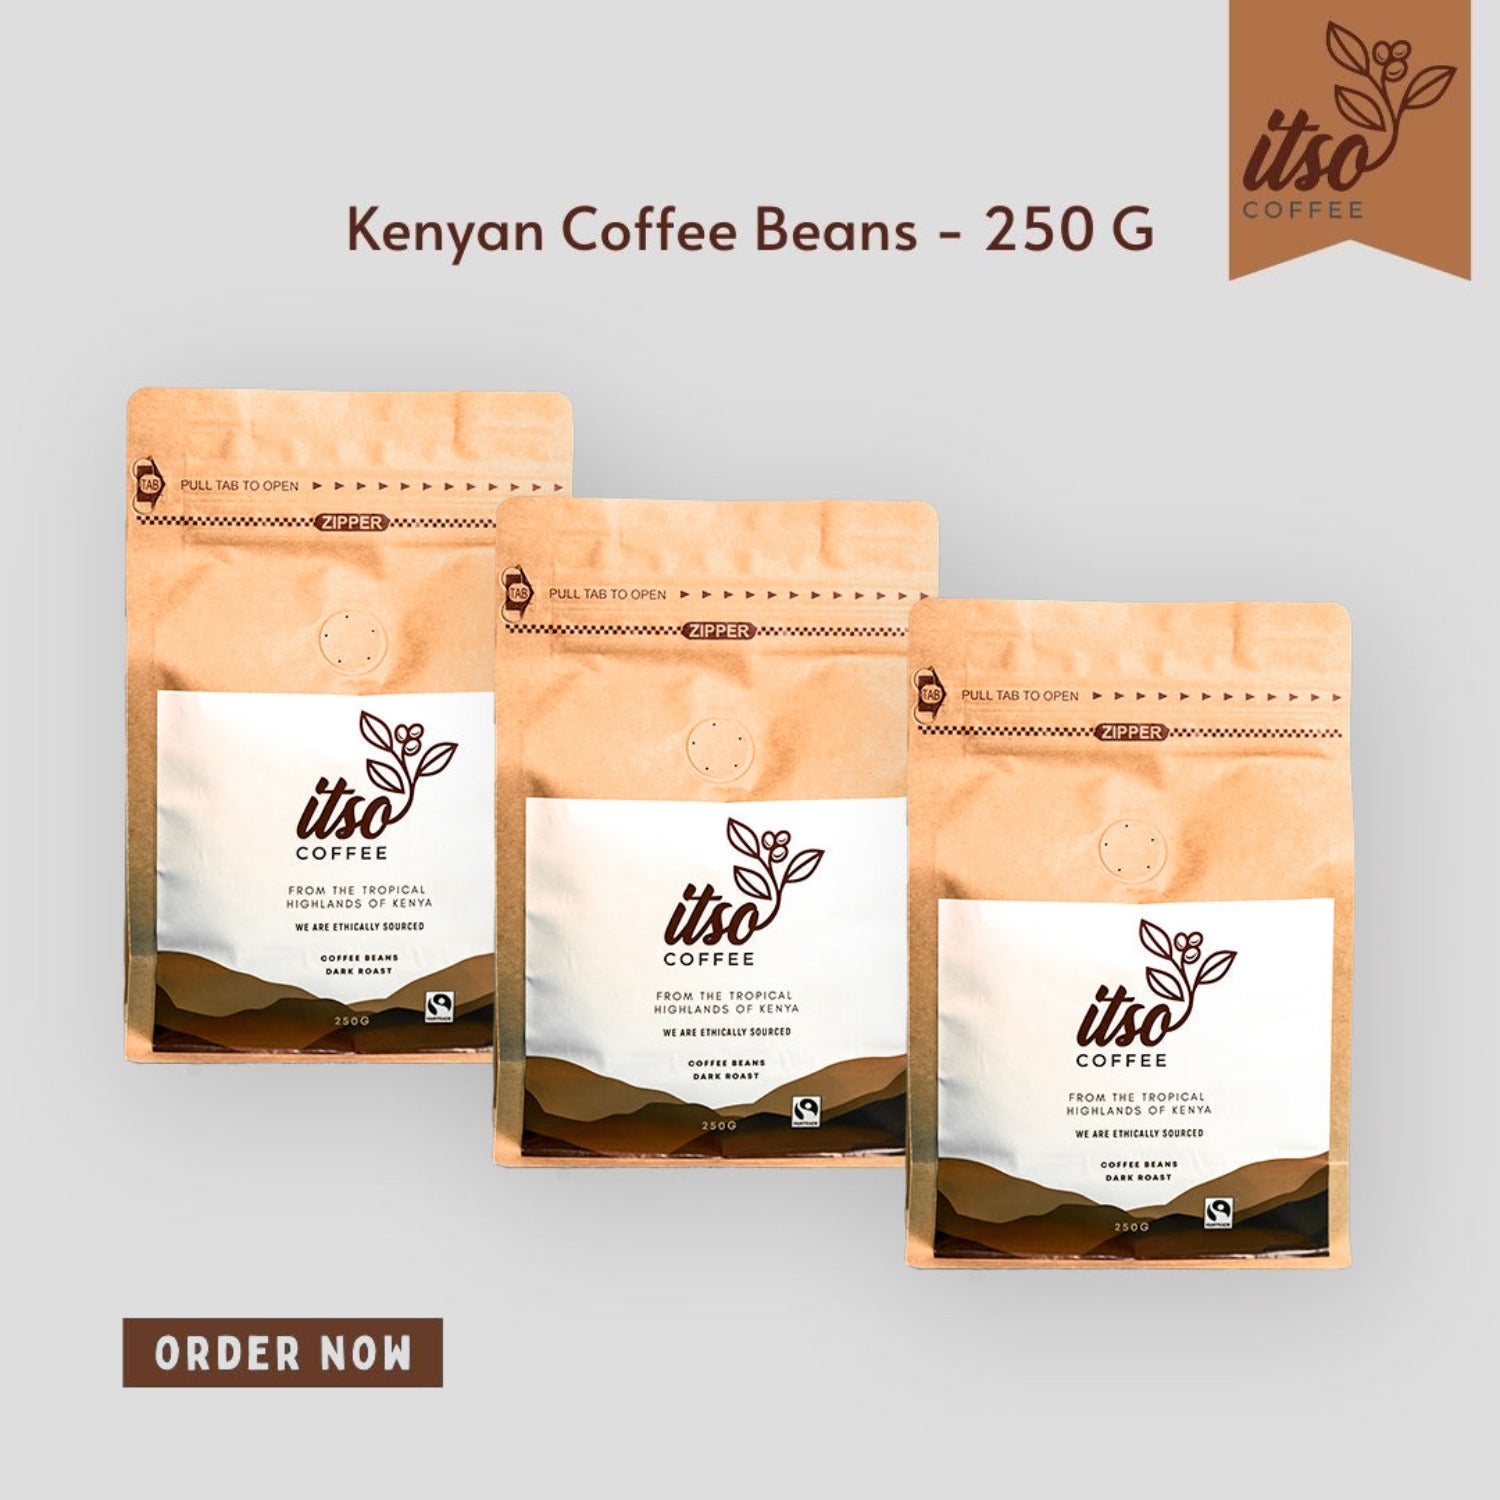 Premium Kenyan Dark Roast Coffee Beans - 250 G